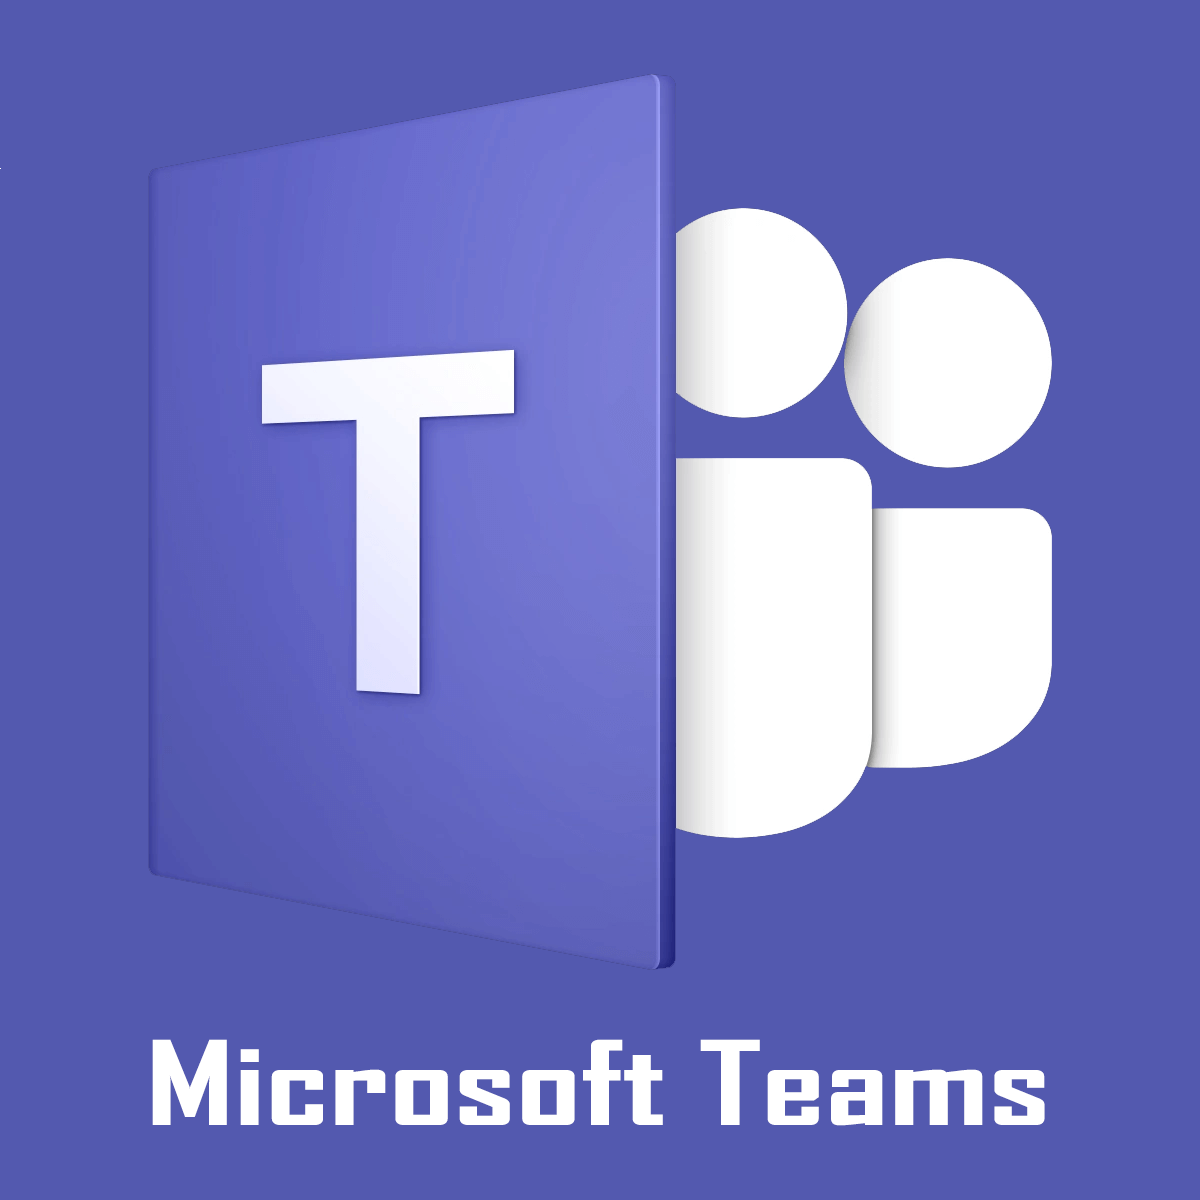 microsoft teams free download for windows 7 32 bit